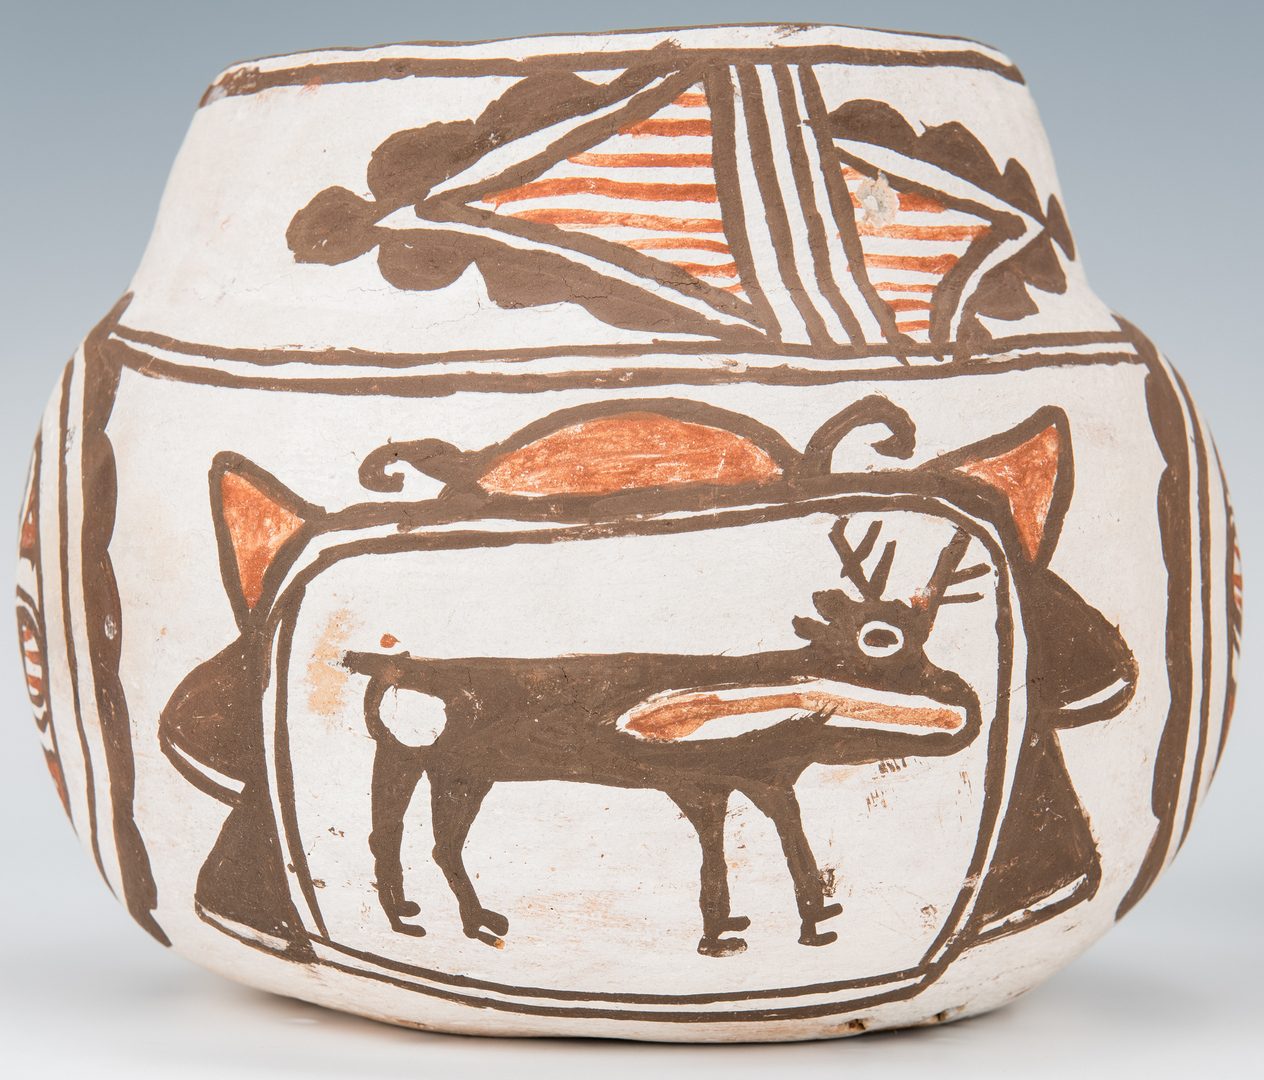 Lot 276: 3 Native American Pottery items, Zuni & Hopi